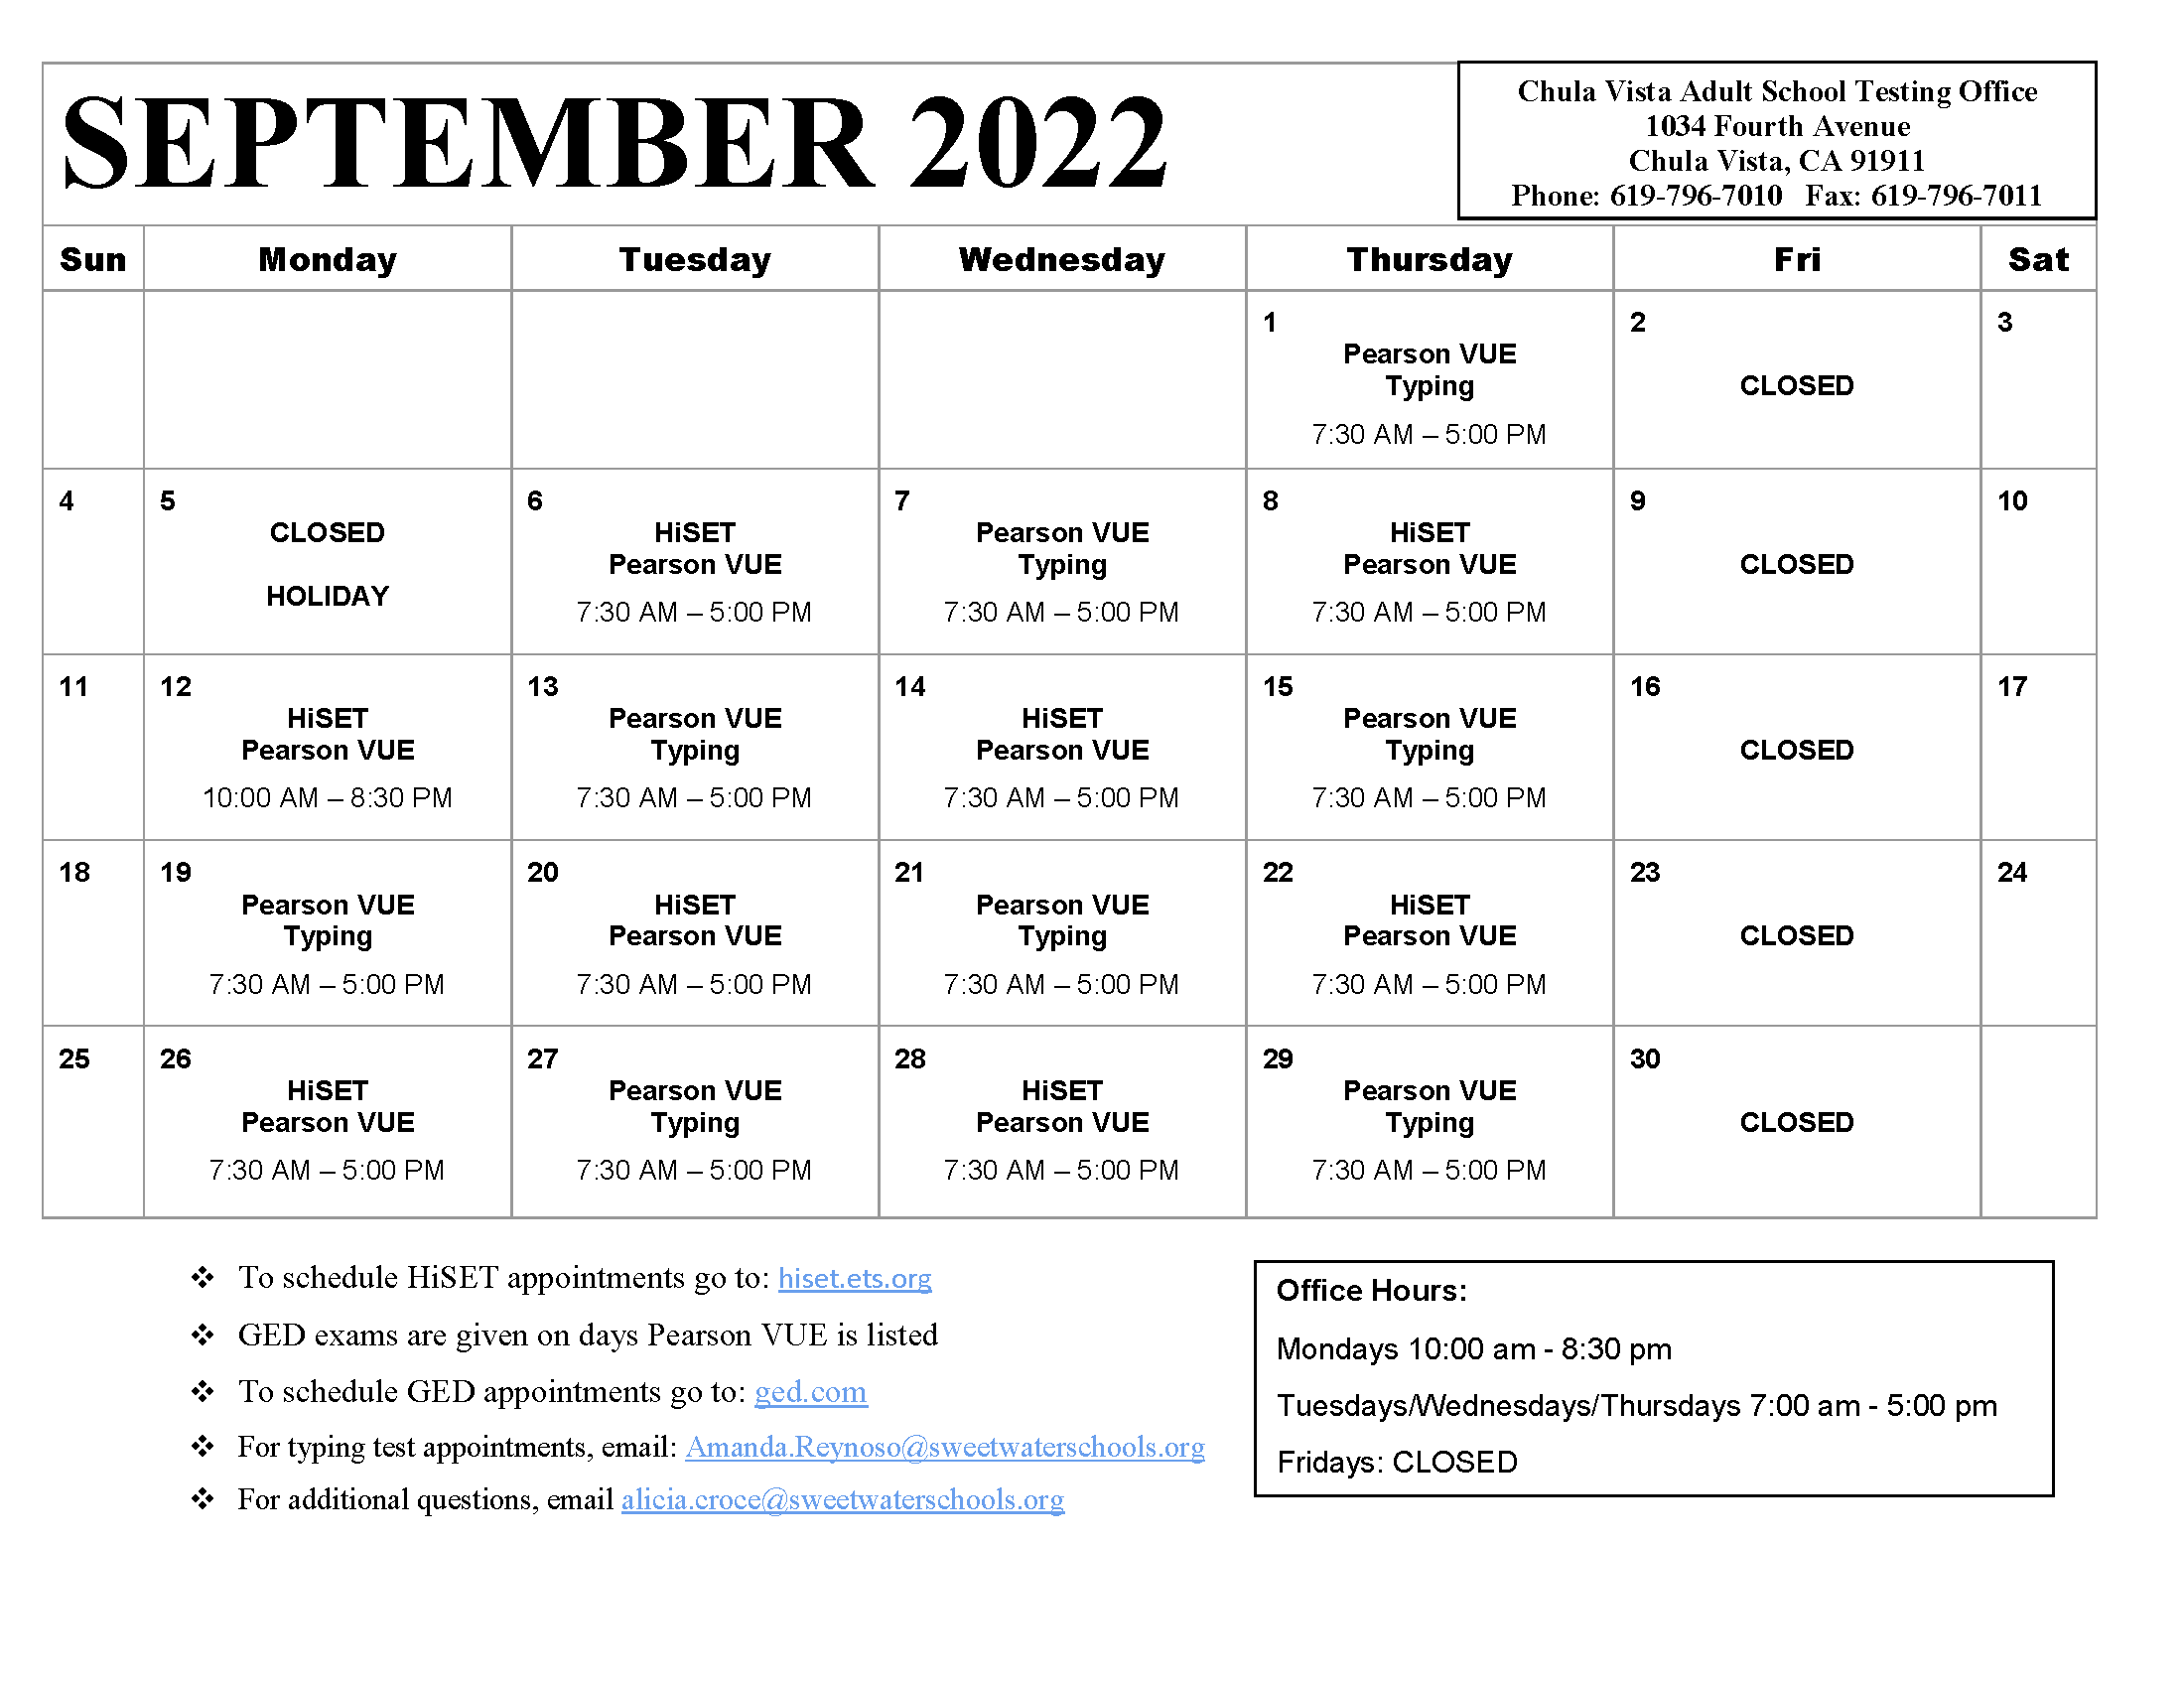 Calendar of September 2022 testing dates for the Chula Vista Testing Center